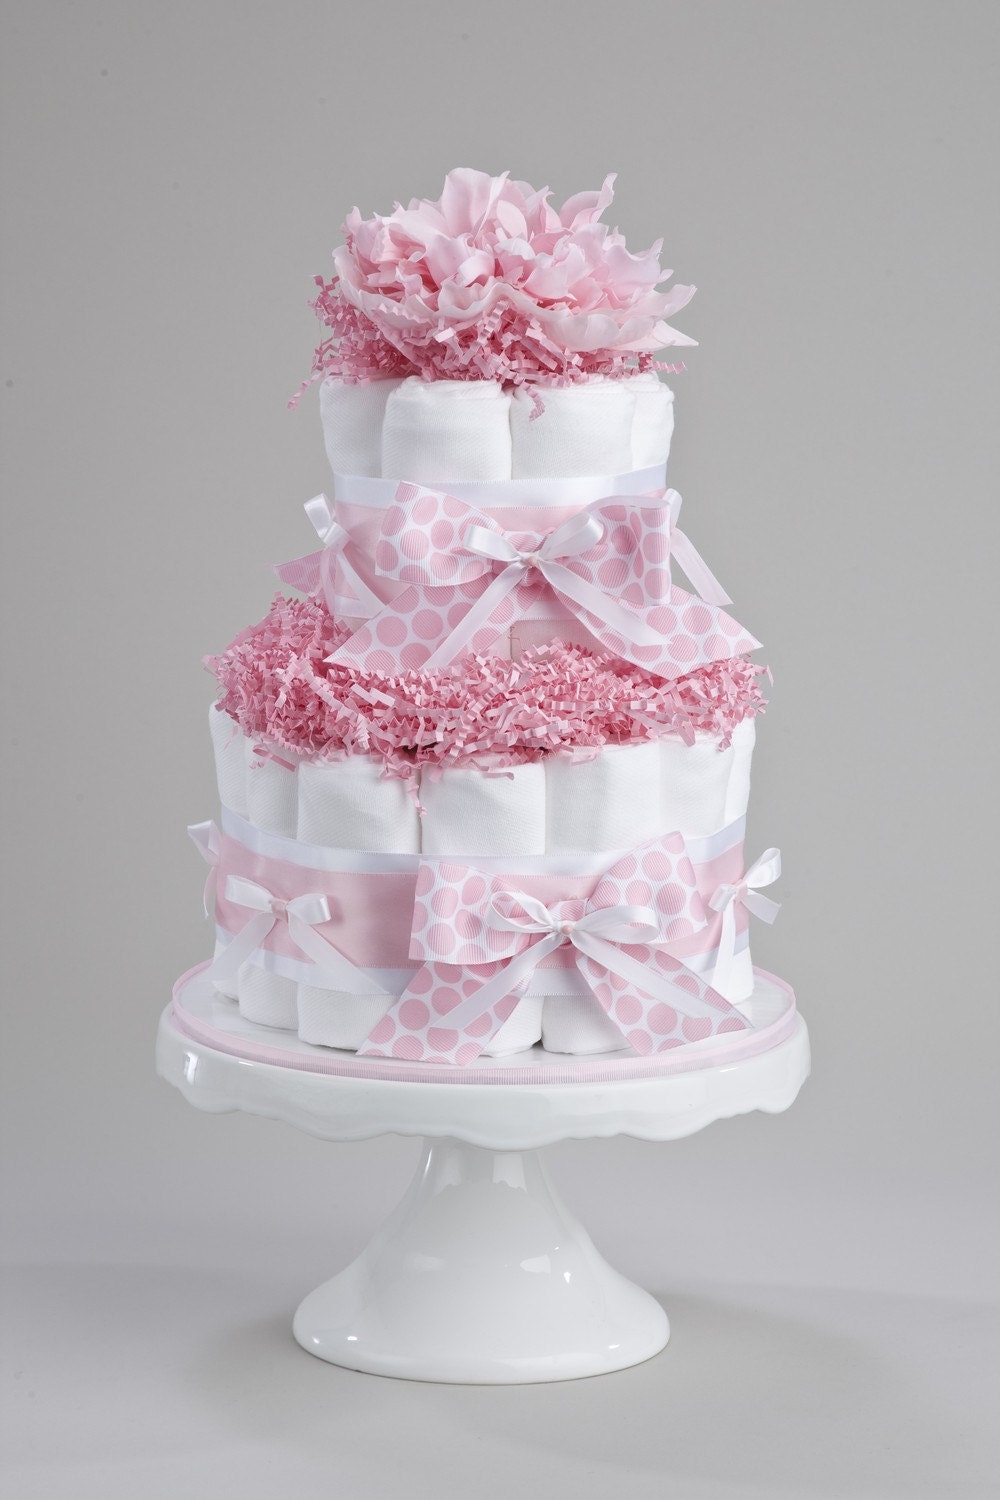 Cloth Baby Cake-Girl Cupcake Onesie Gift Set The Riley   baby shower   ایده برای تزیین سیسمونی  نوزاد و فرشته كوچولو جشن سیسمونی یا